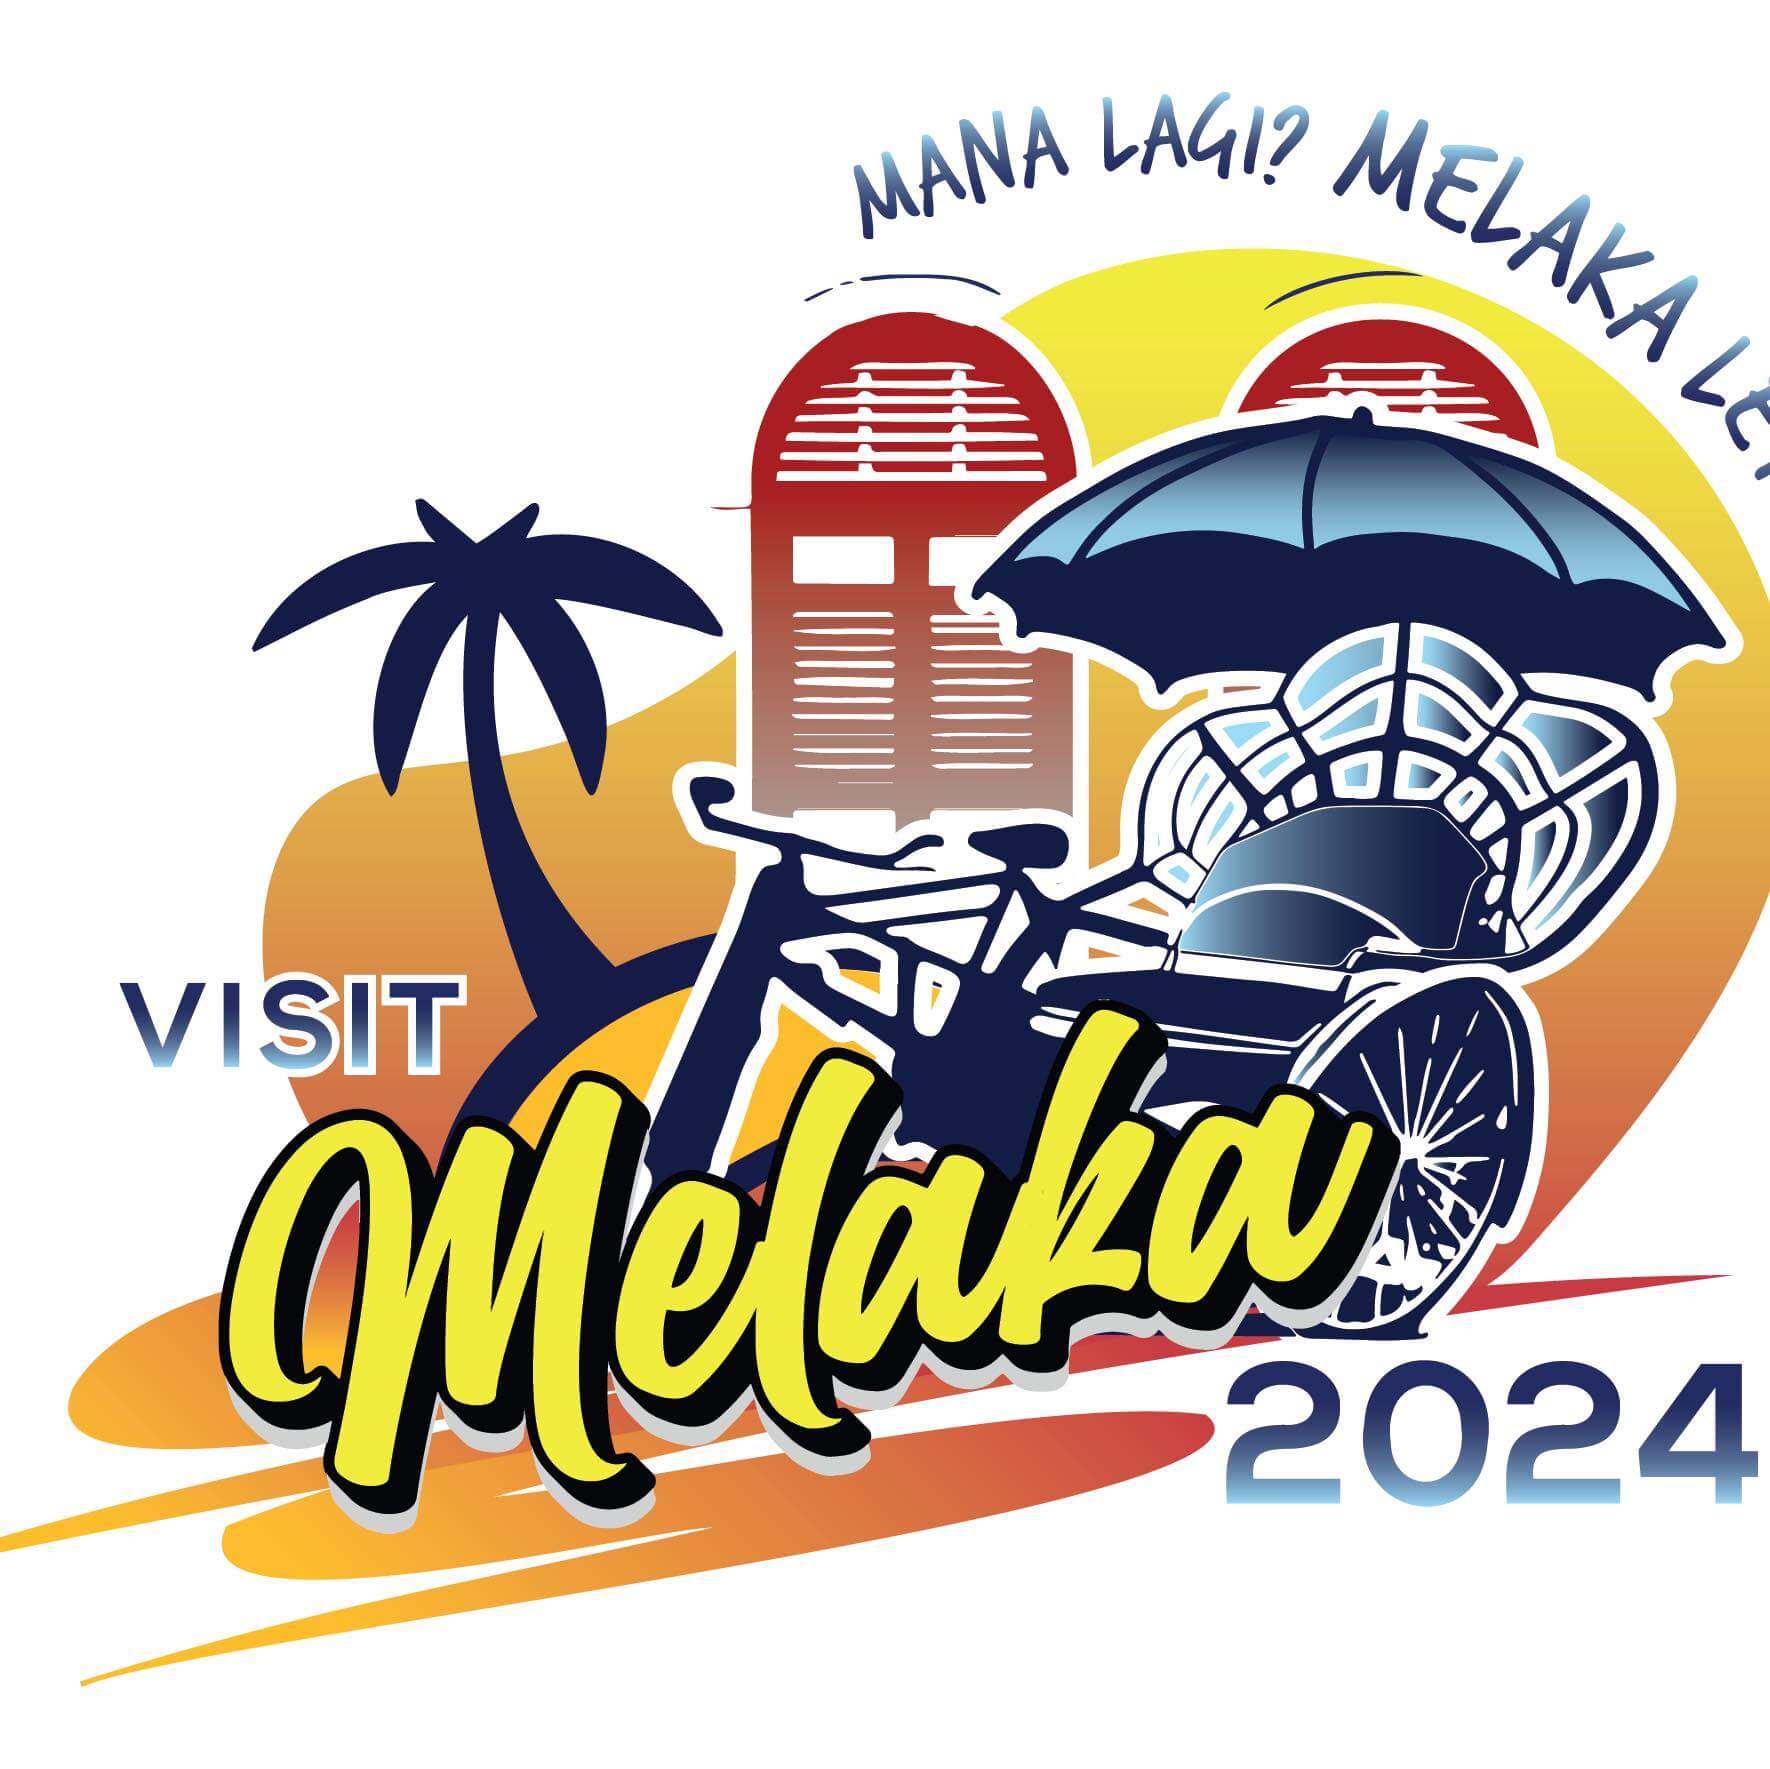 Tourism Melaka